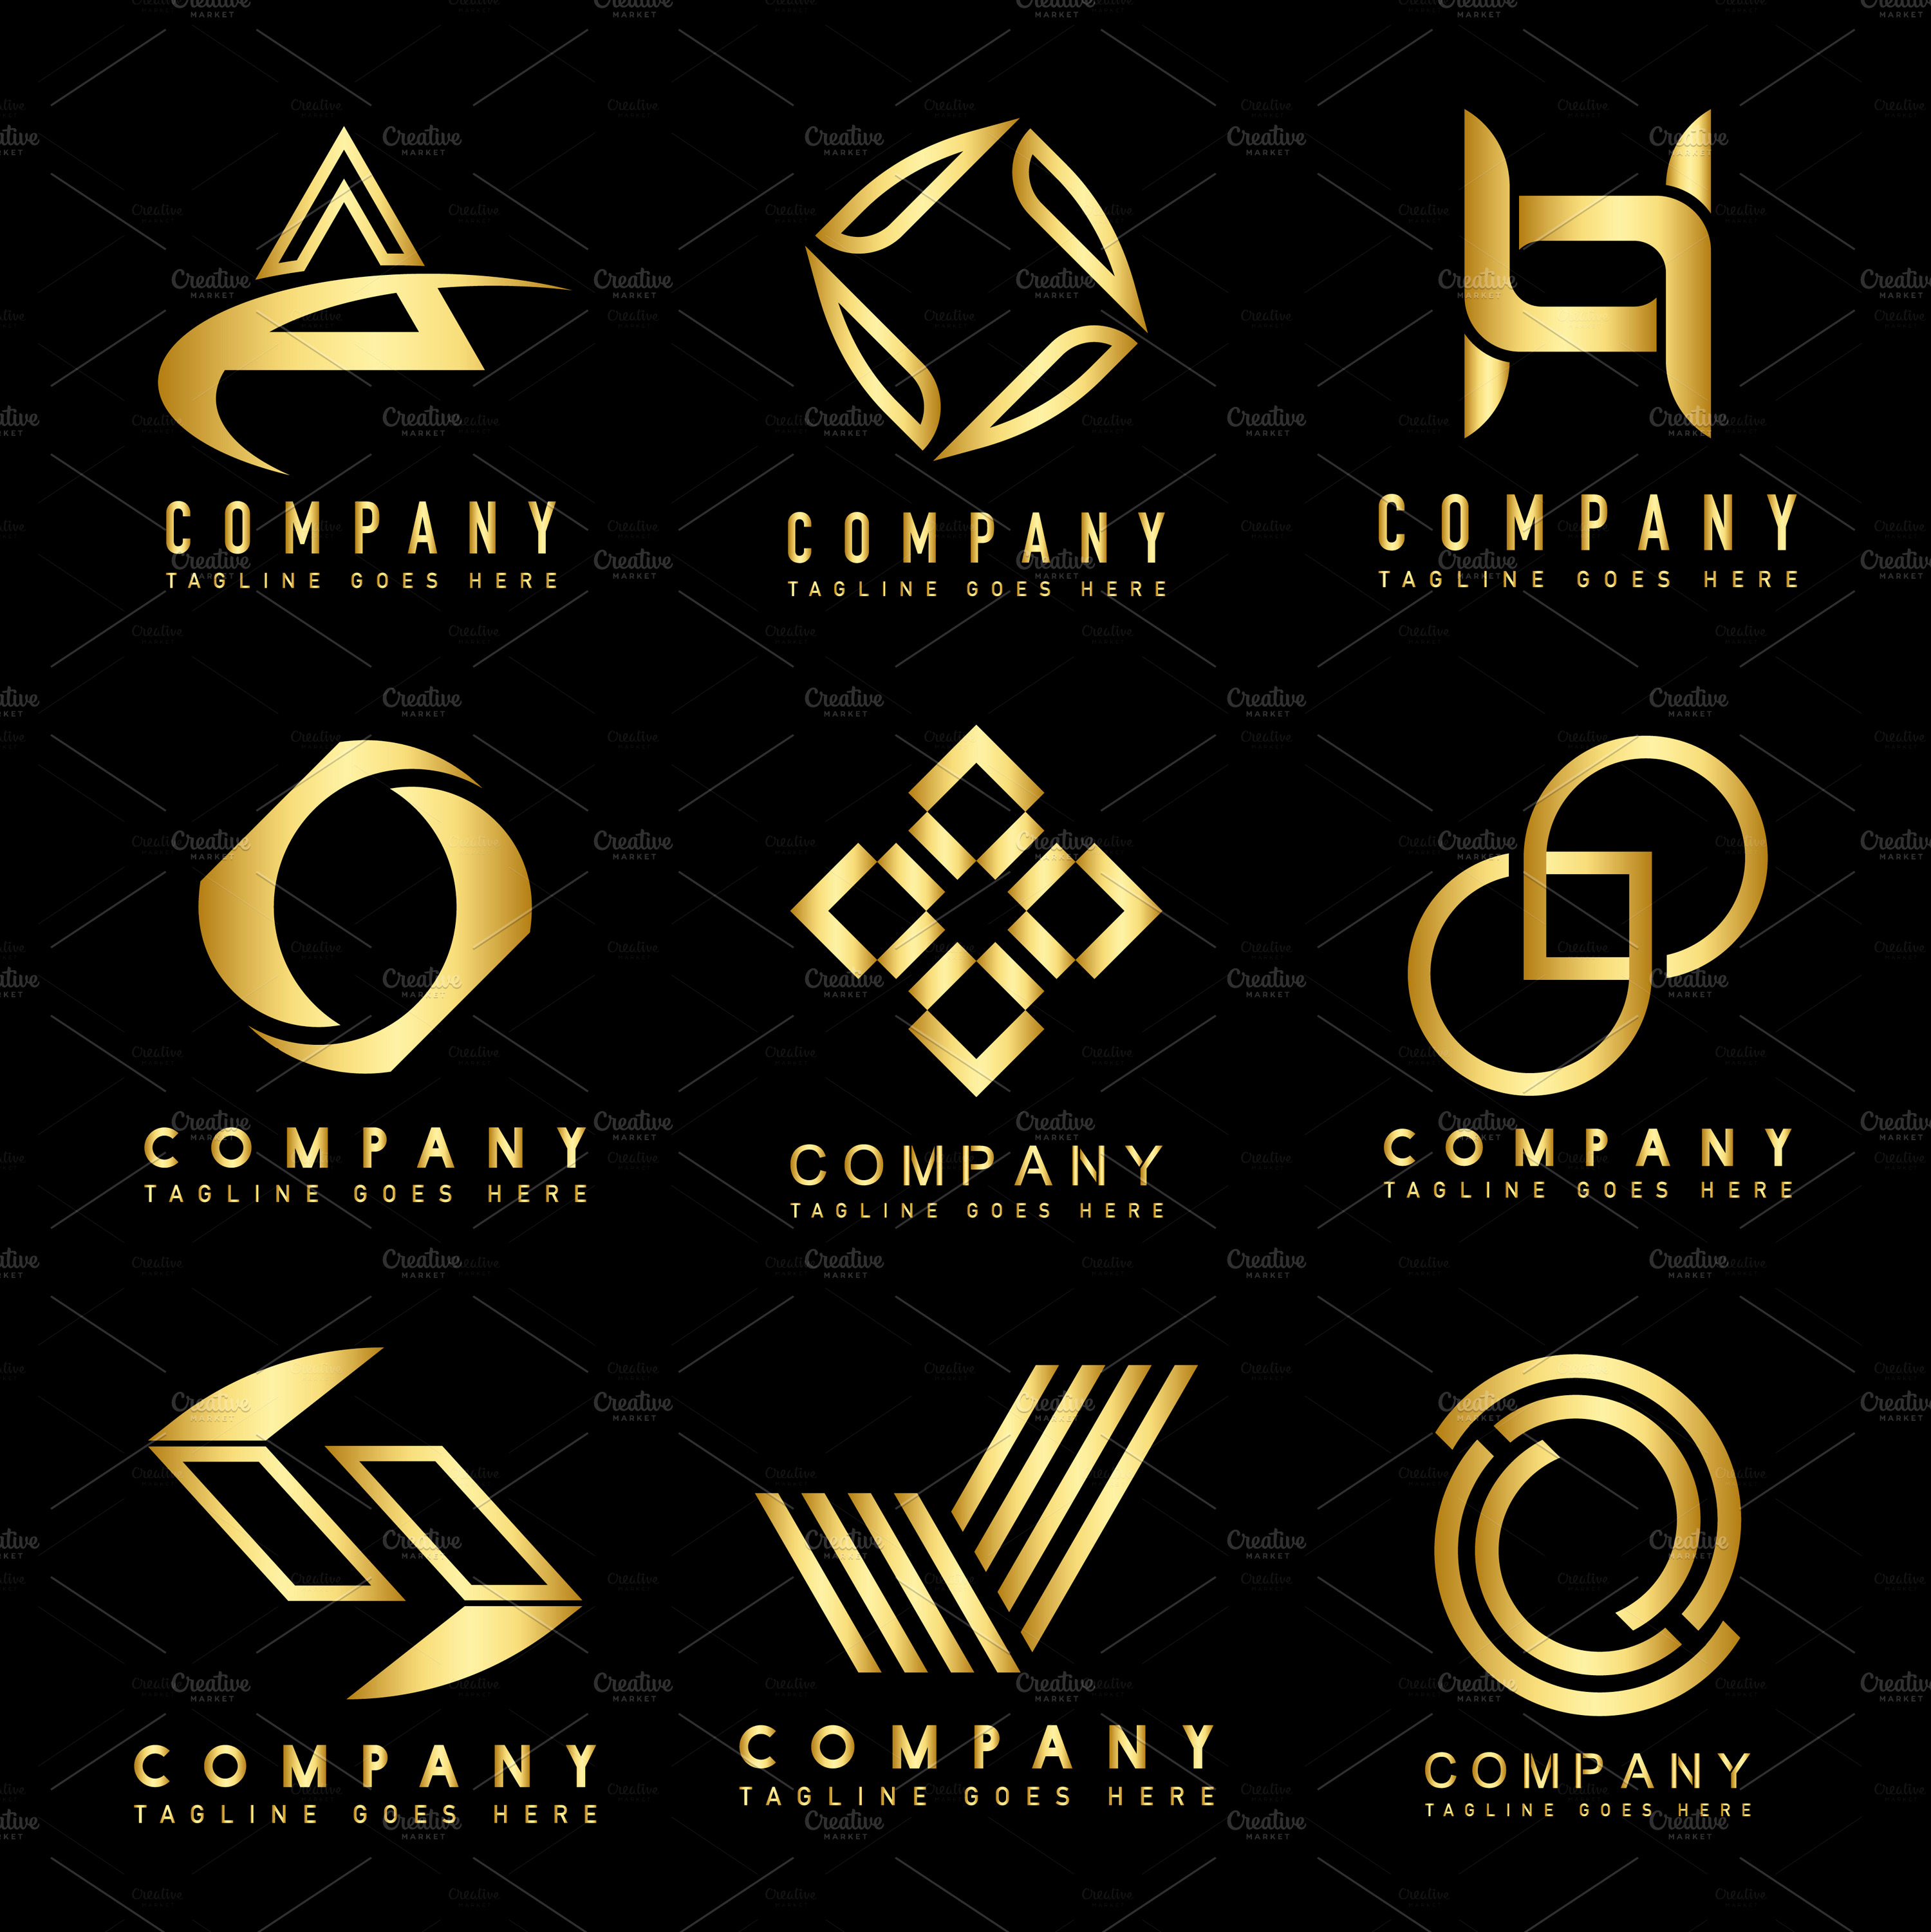 Set of company logo design ideas ~ Graphics ~ Creative Market